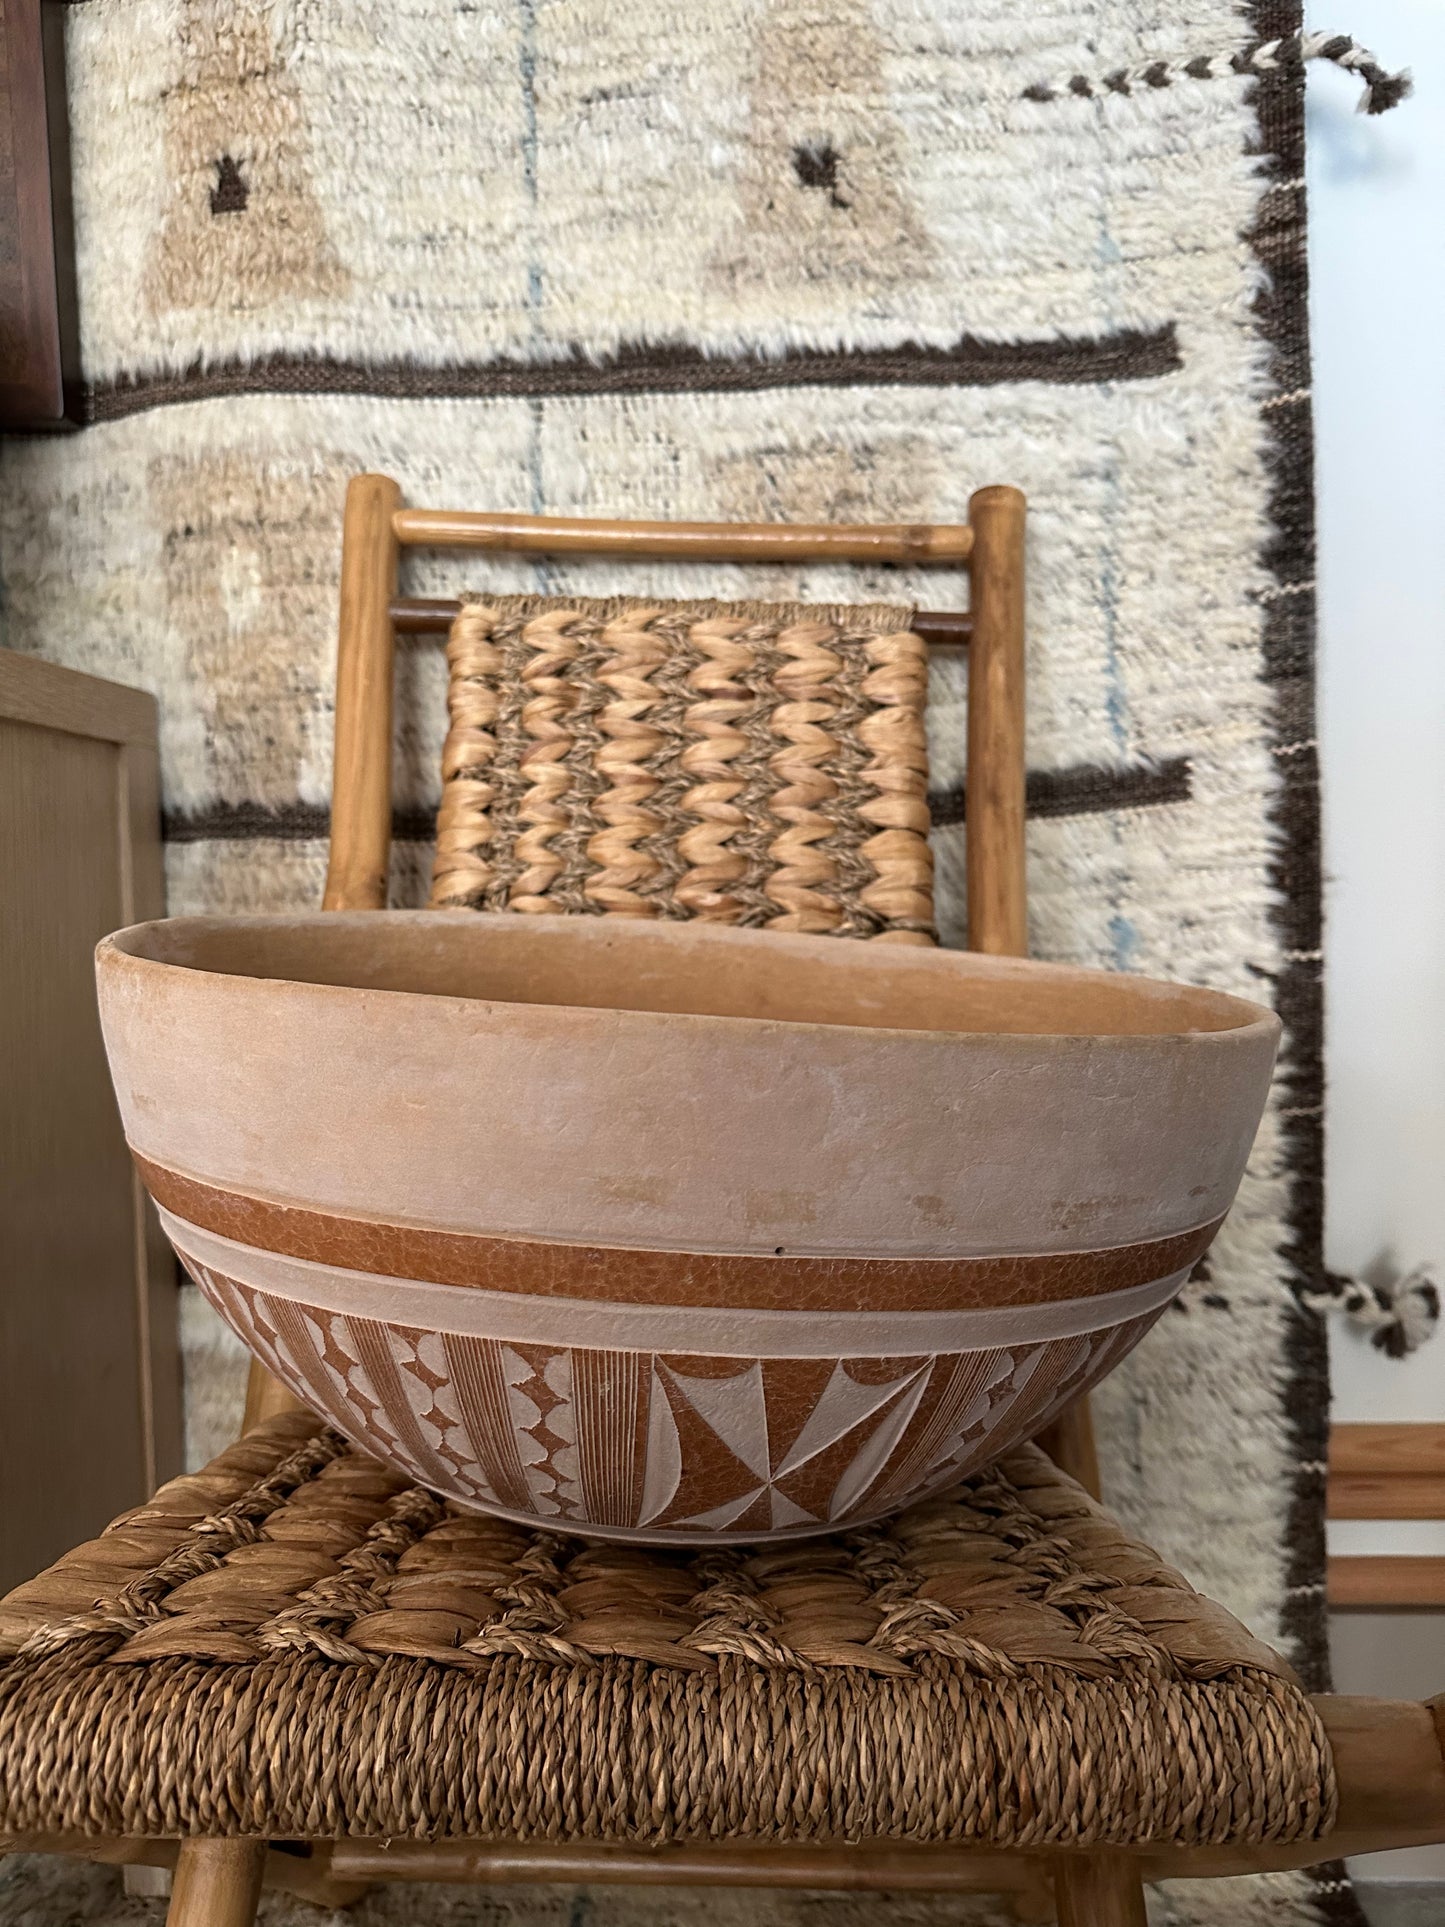 Decorative Carved Gourd Bowl